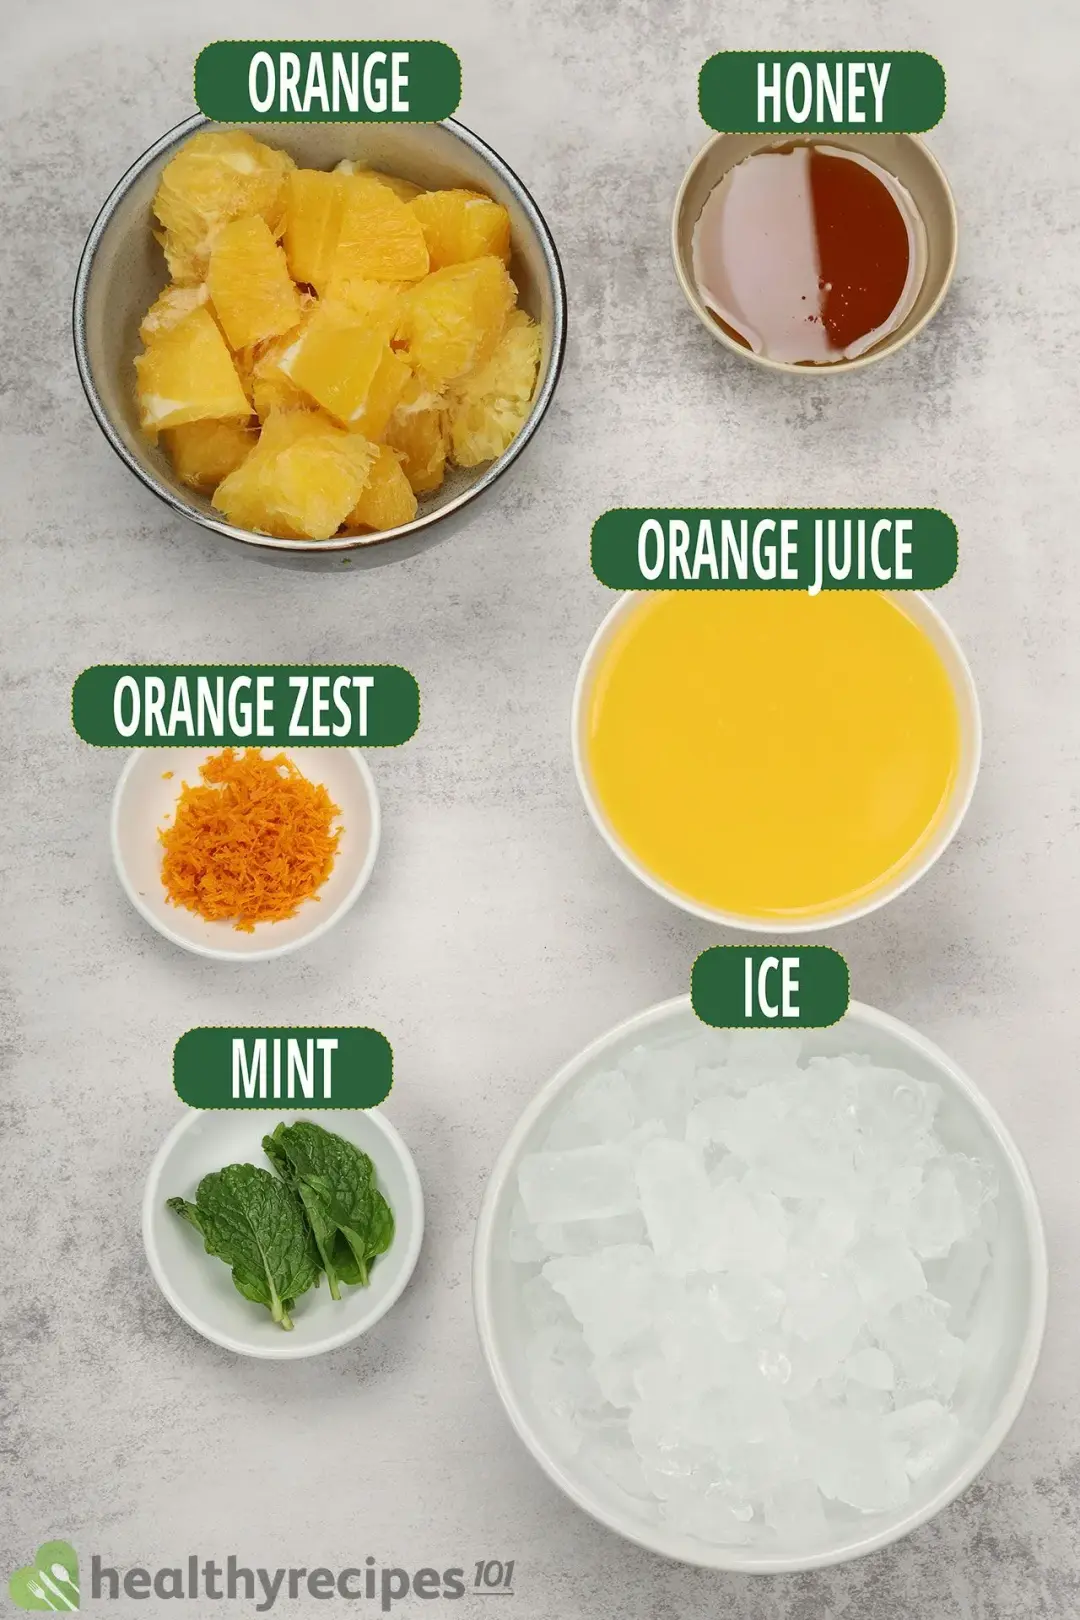 Ingredients for This Orange Smoothie